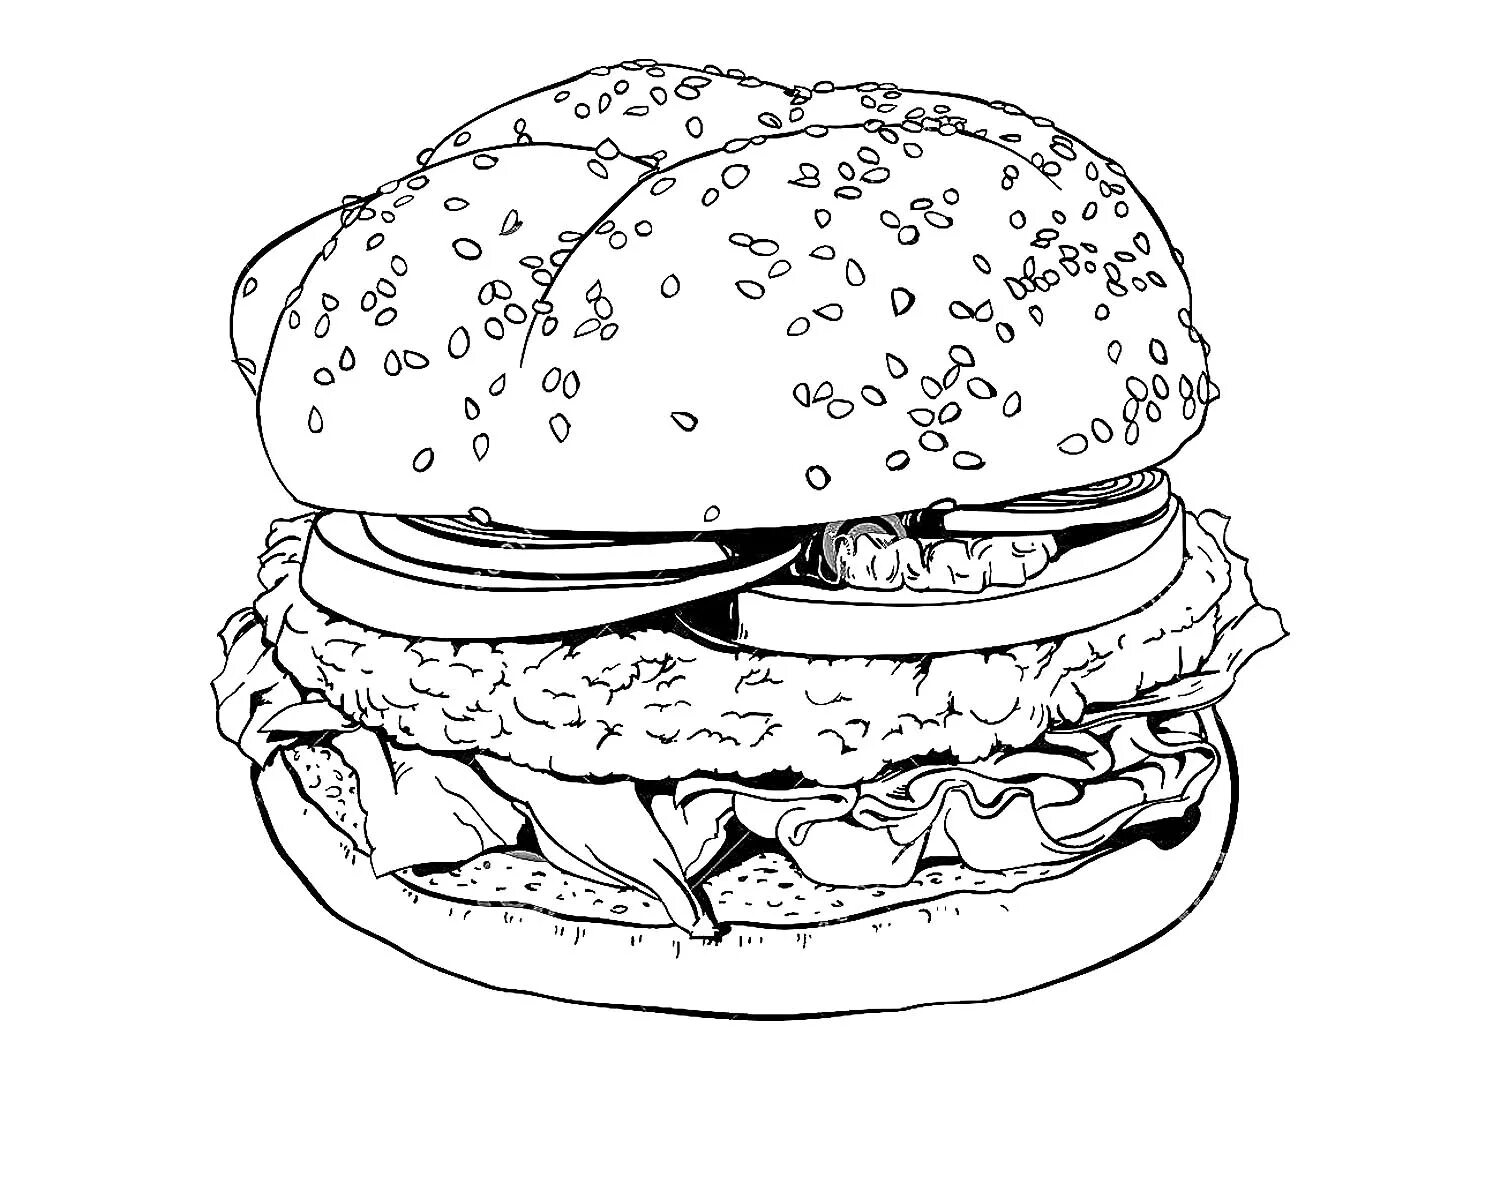 Playful cheeseburger coloring page